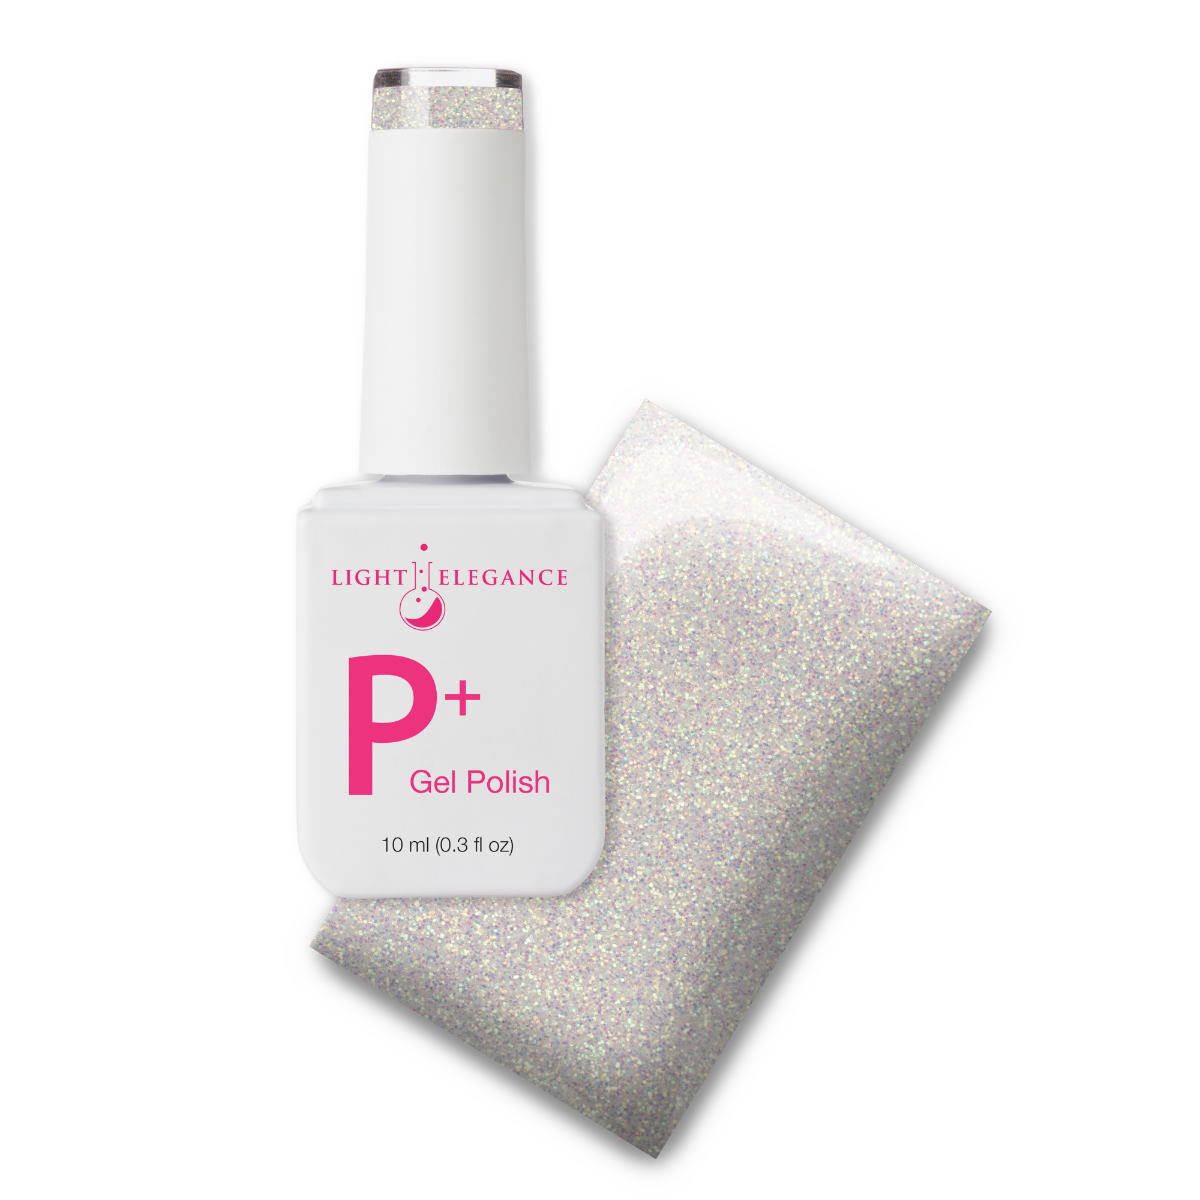 Light Elegance P+ Soak Off Glitter Gel - Go-Go Boots :: New Packaging - Creata Beauty - Professional Beauty Products